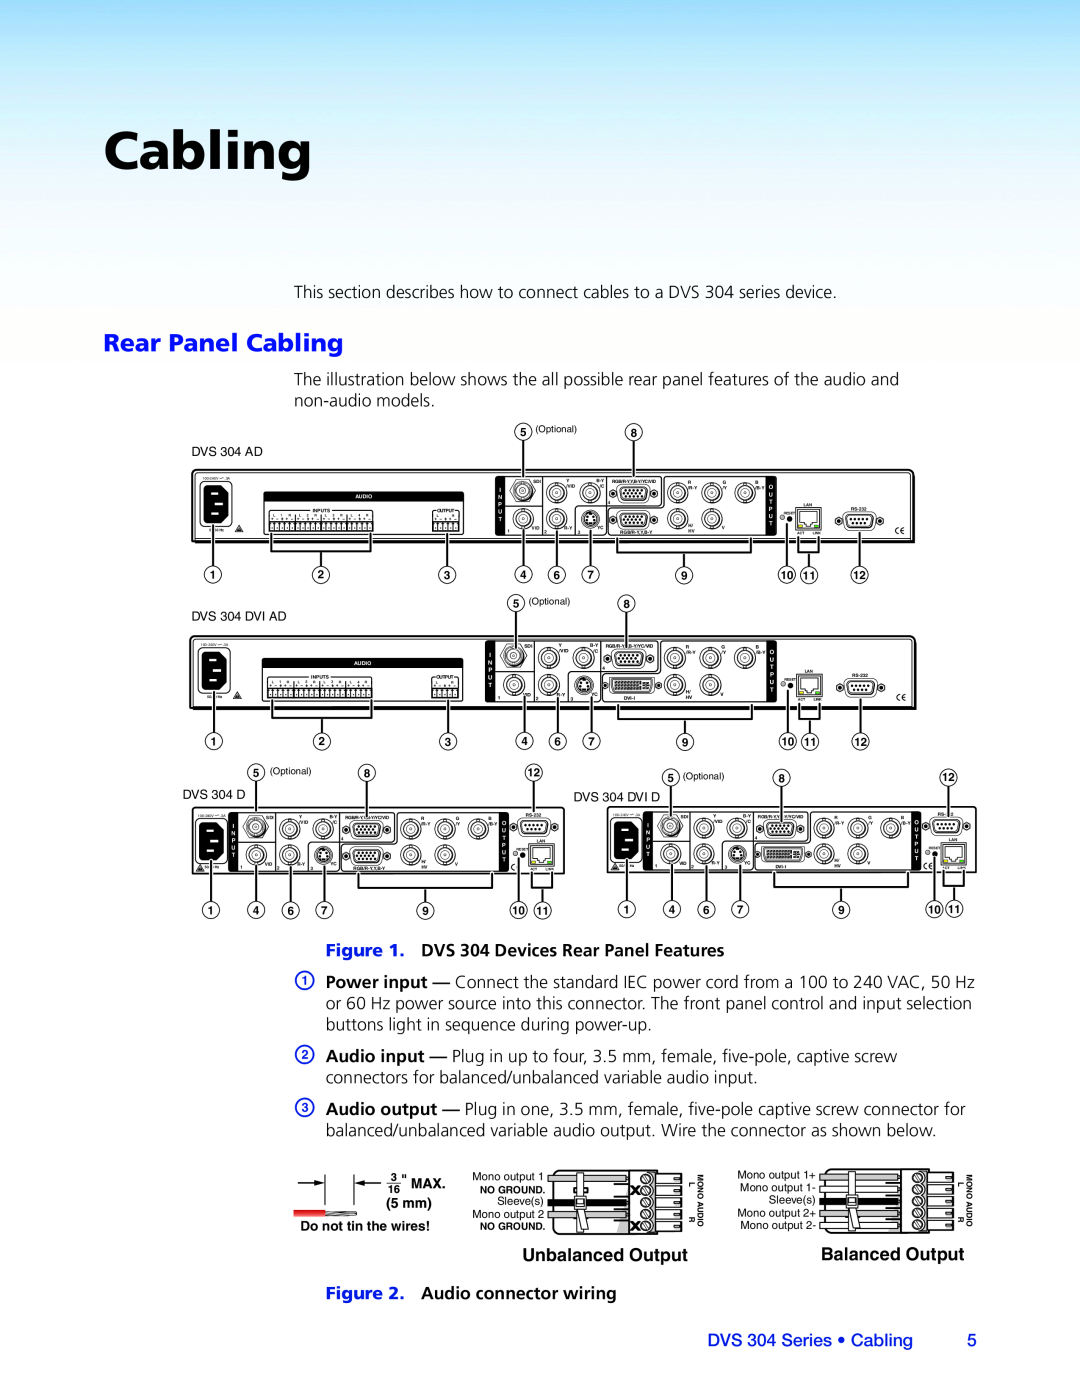 Extron electronic manual Rear Panel Cabling, Unbalanced Output, Balanced Output, DVS 304 Series • Cabling 